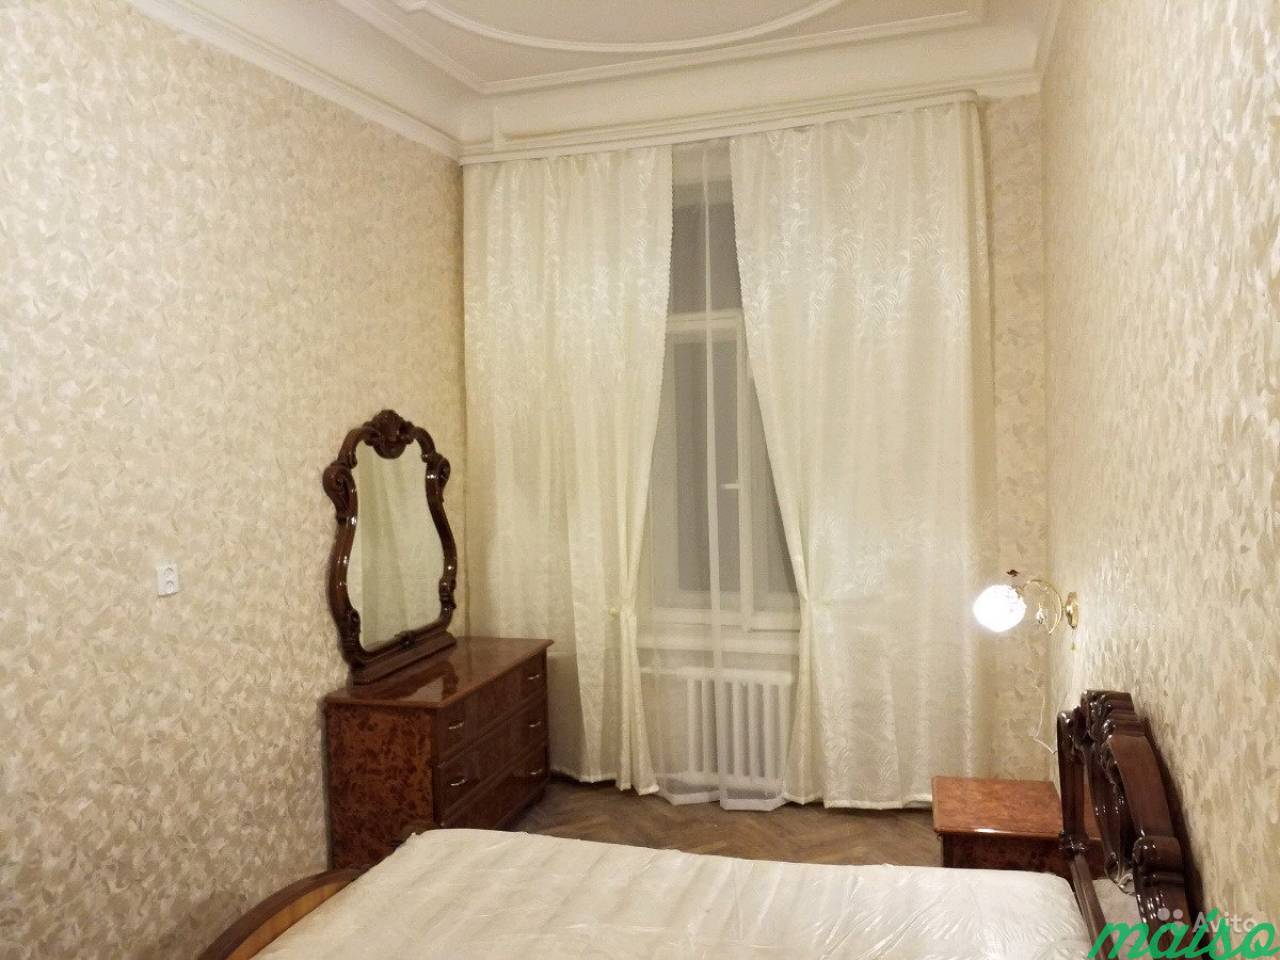 Комната 16 м² в 5-к, 3/5 эт. в Санкт-Петербурге. Фото 5